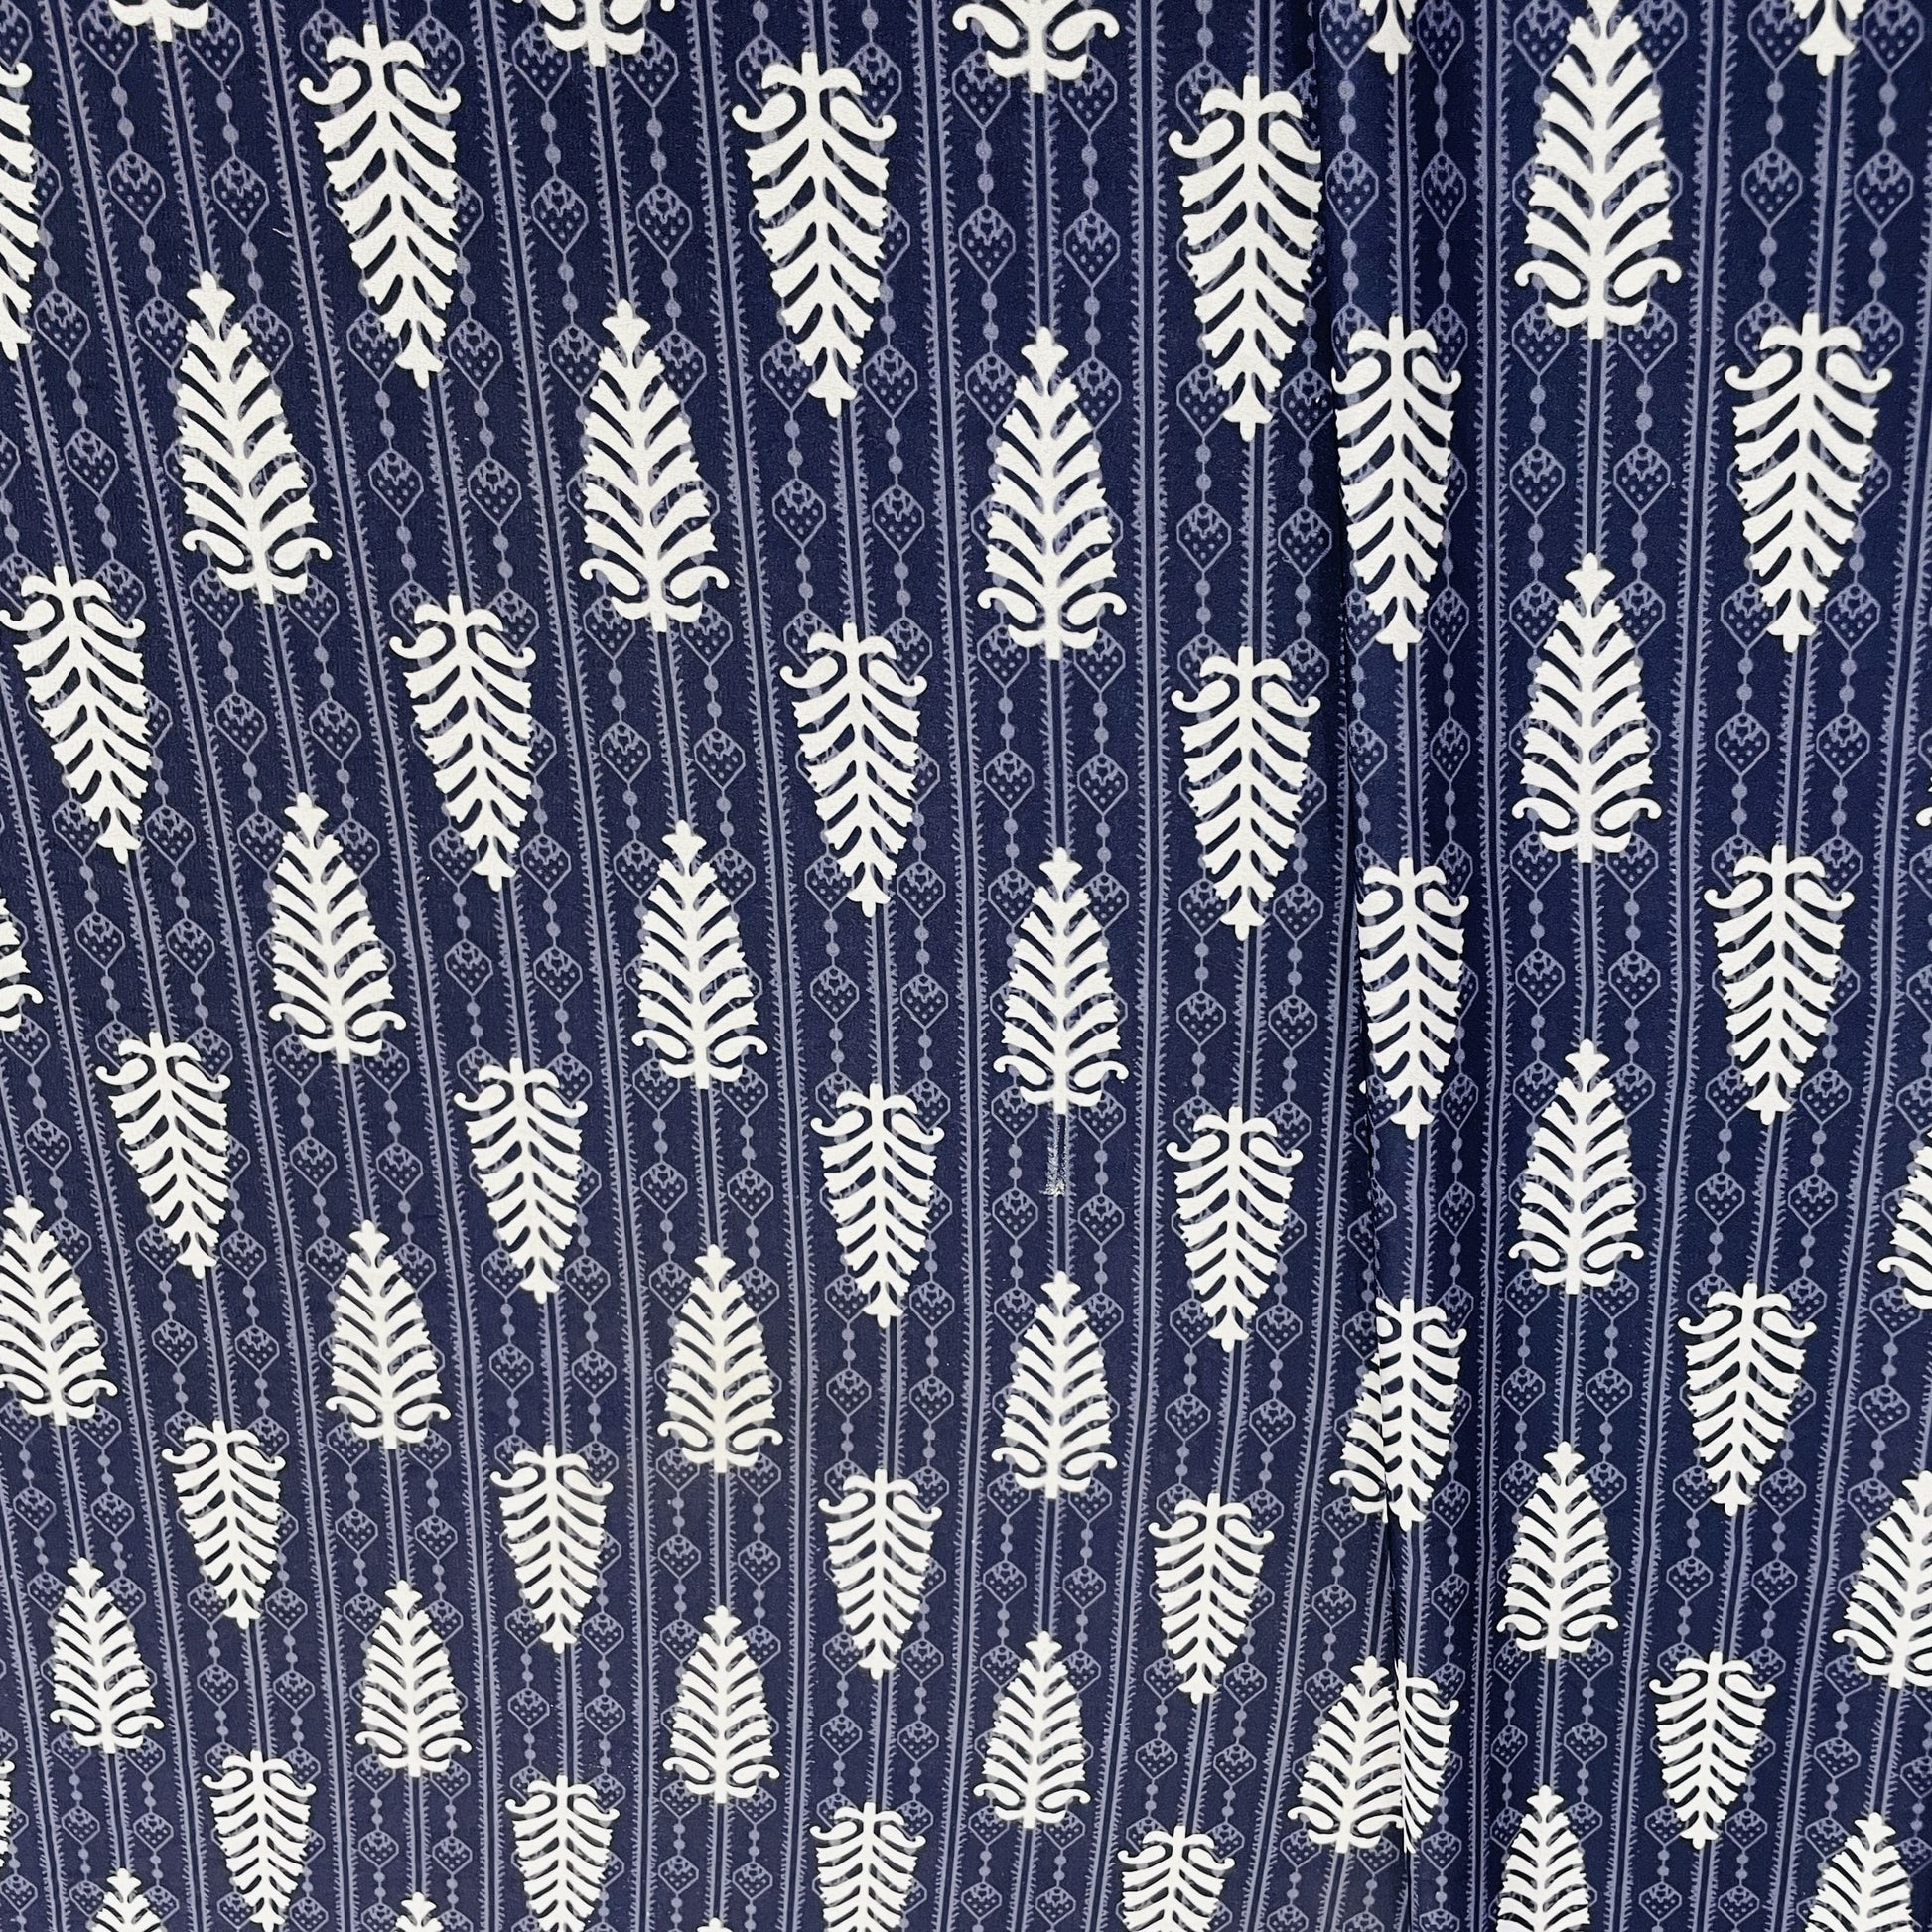 Dark Blue & White Floral Print Crepe Fabric